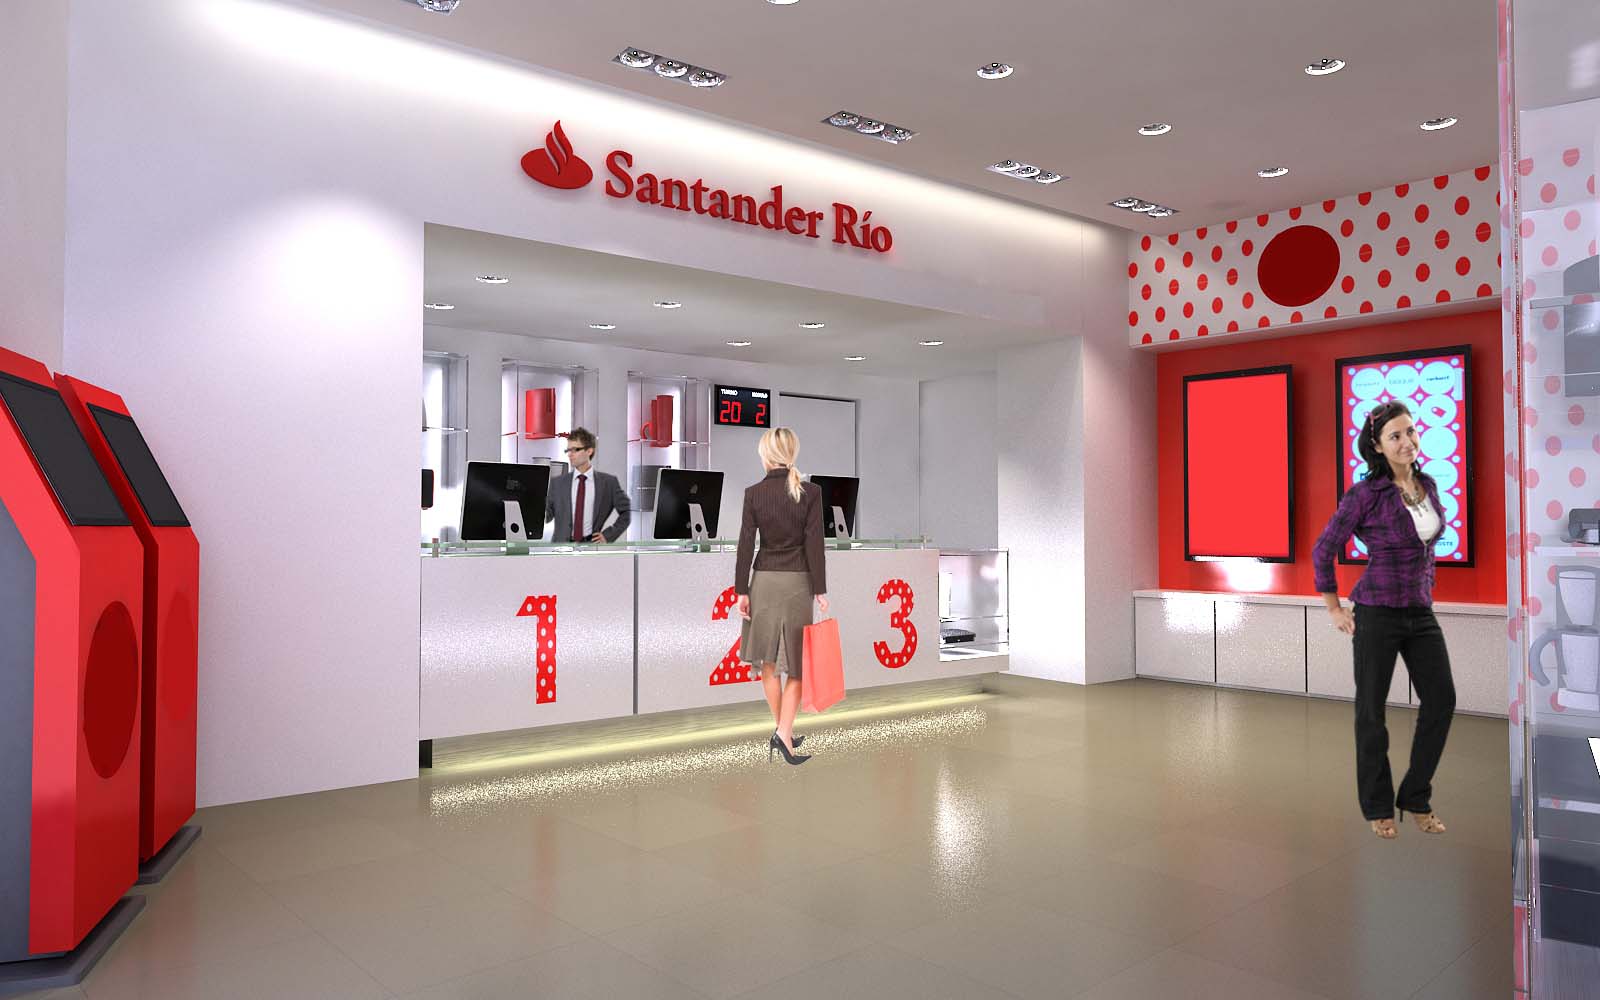 Santander_Rio_2.jpg